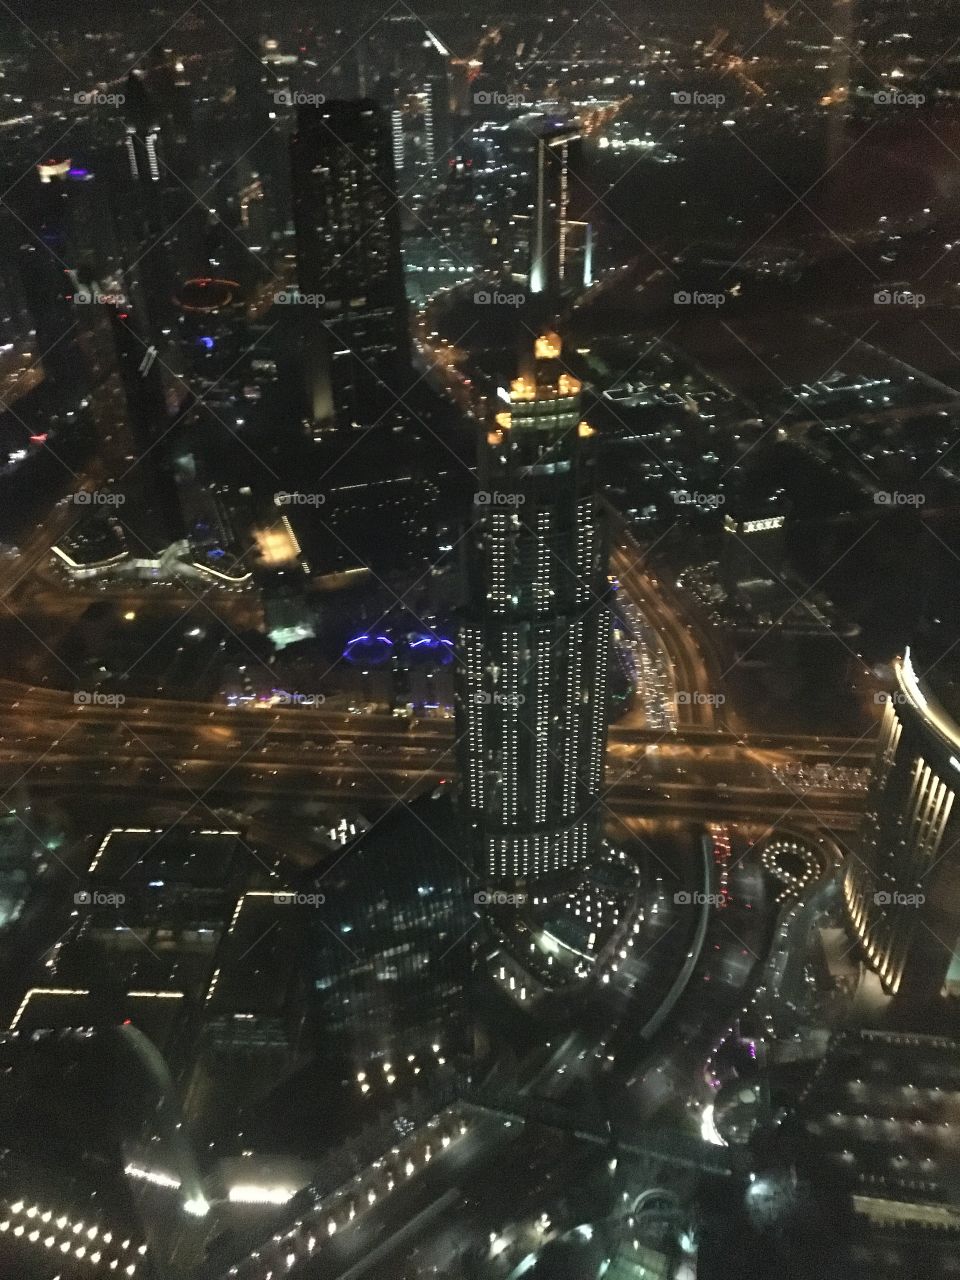 Dubai
Burj Khalifa
The world’s tallest building